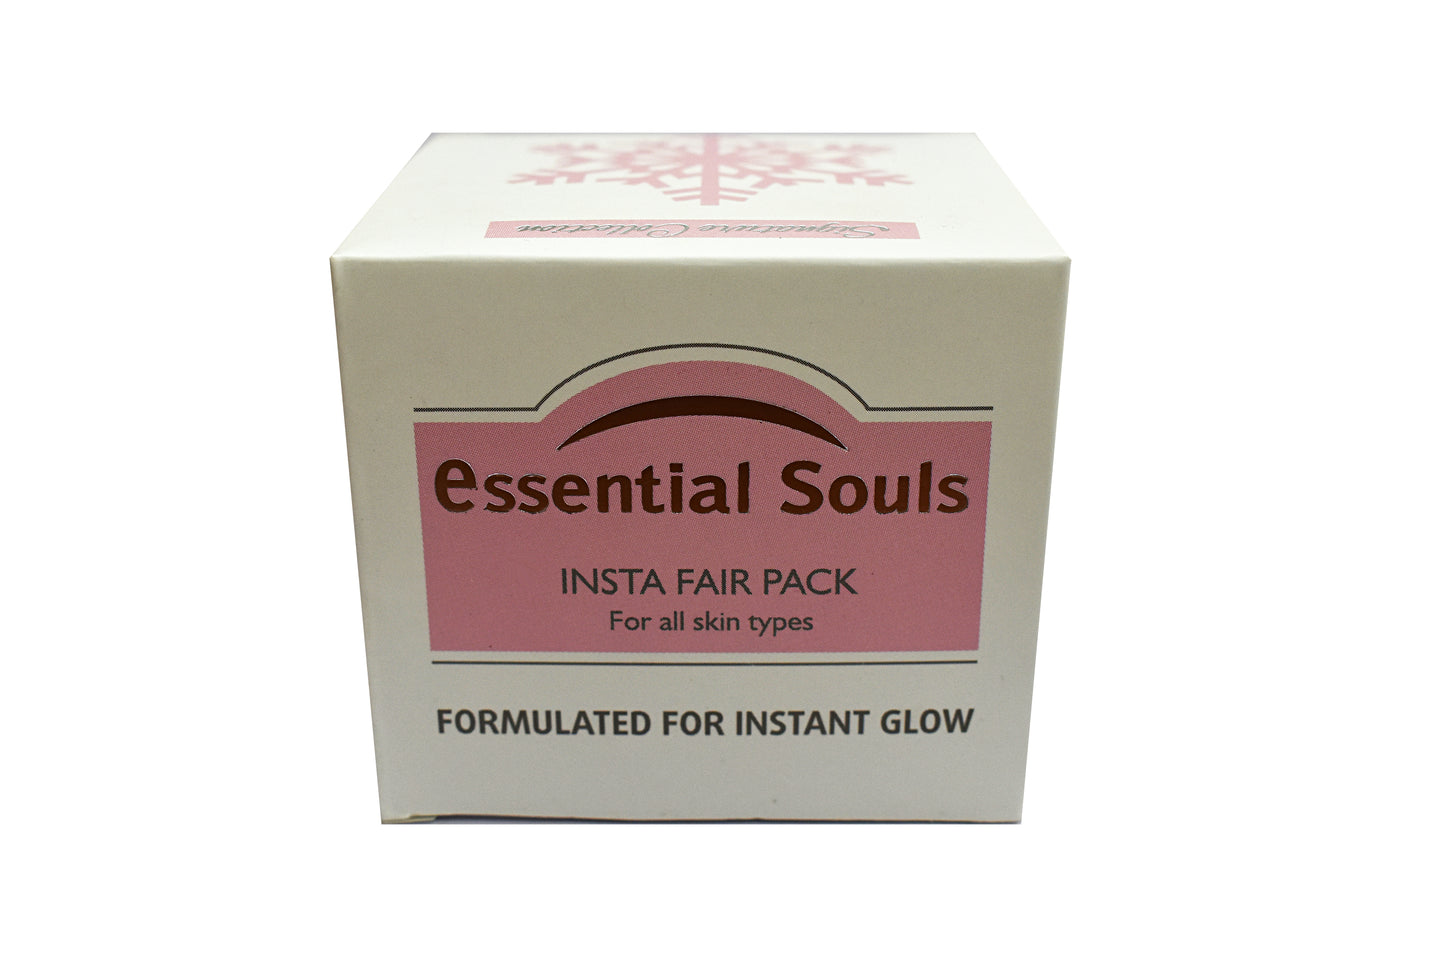 Essential Souls Insta Fair Pack - 50g